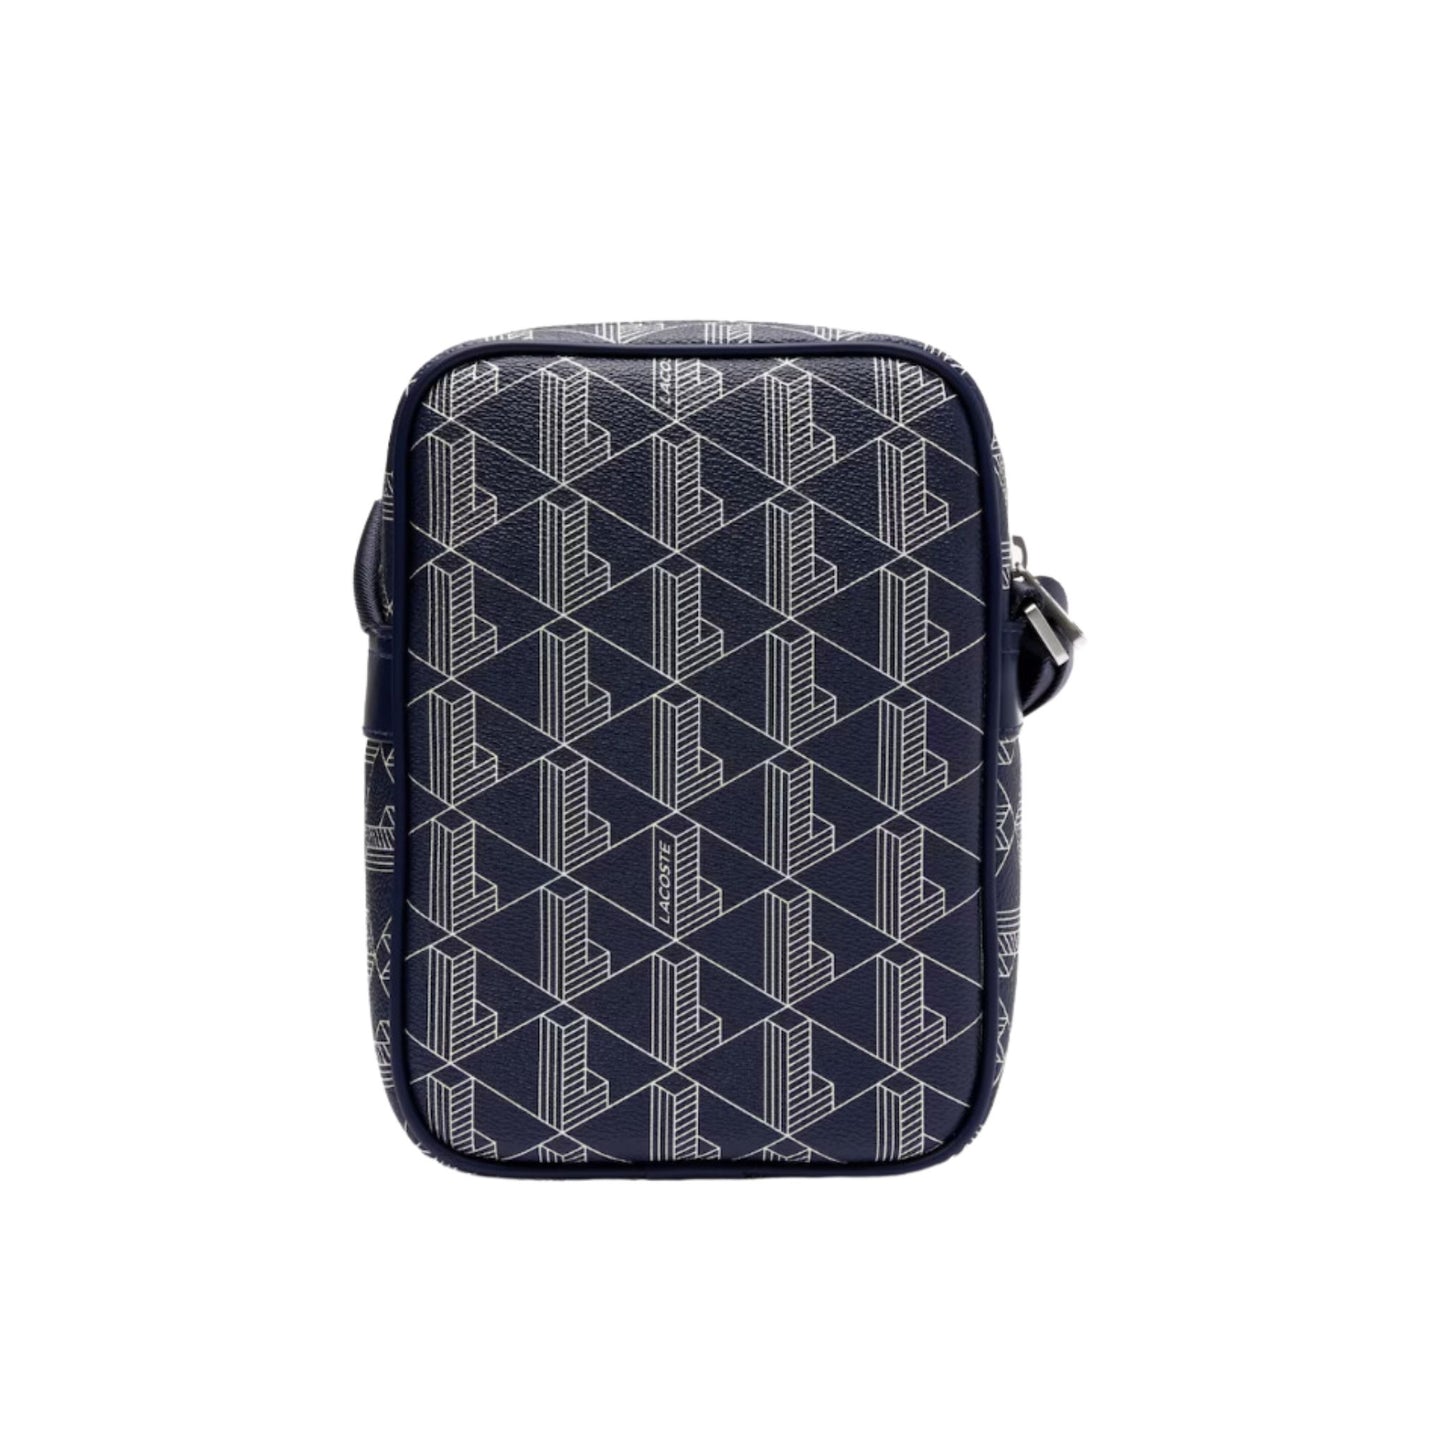 LACOSTE Keychain Feature Shoulder Bag